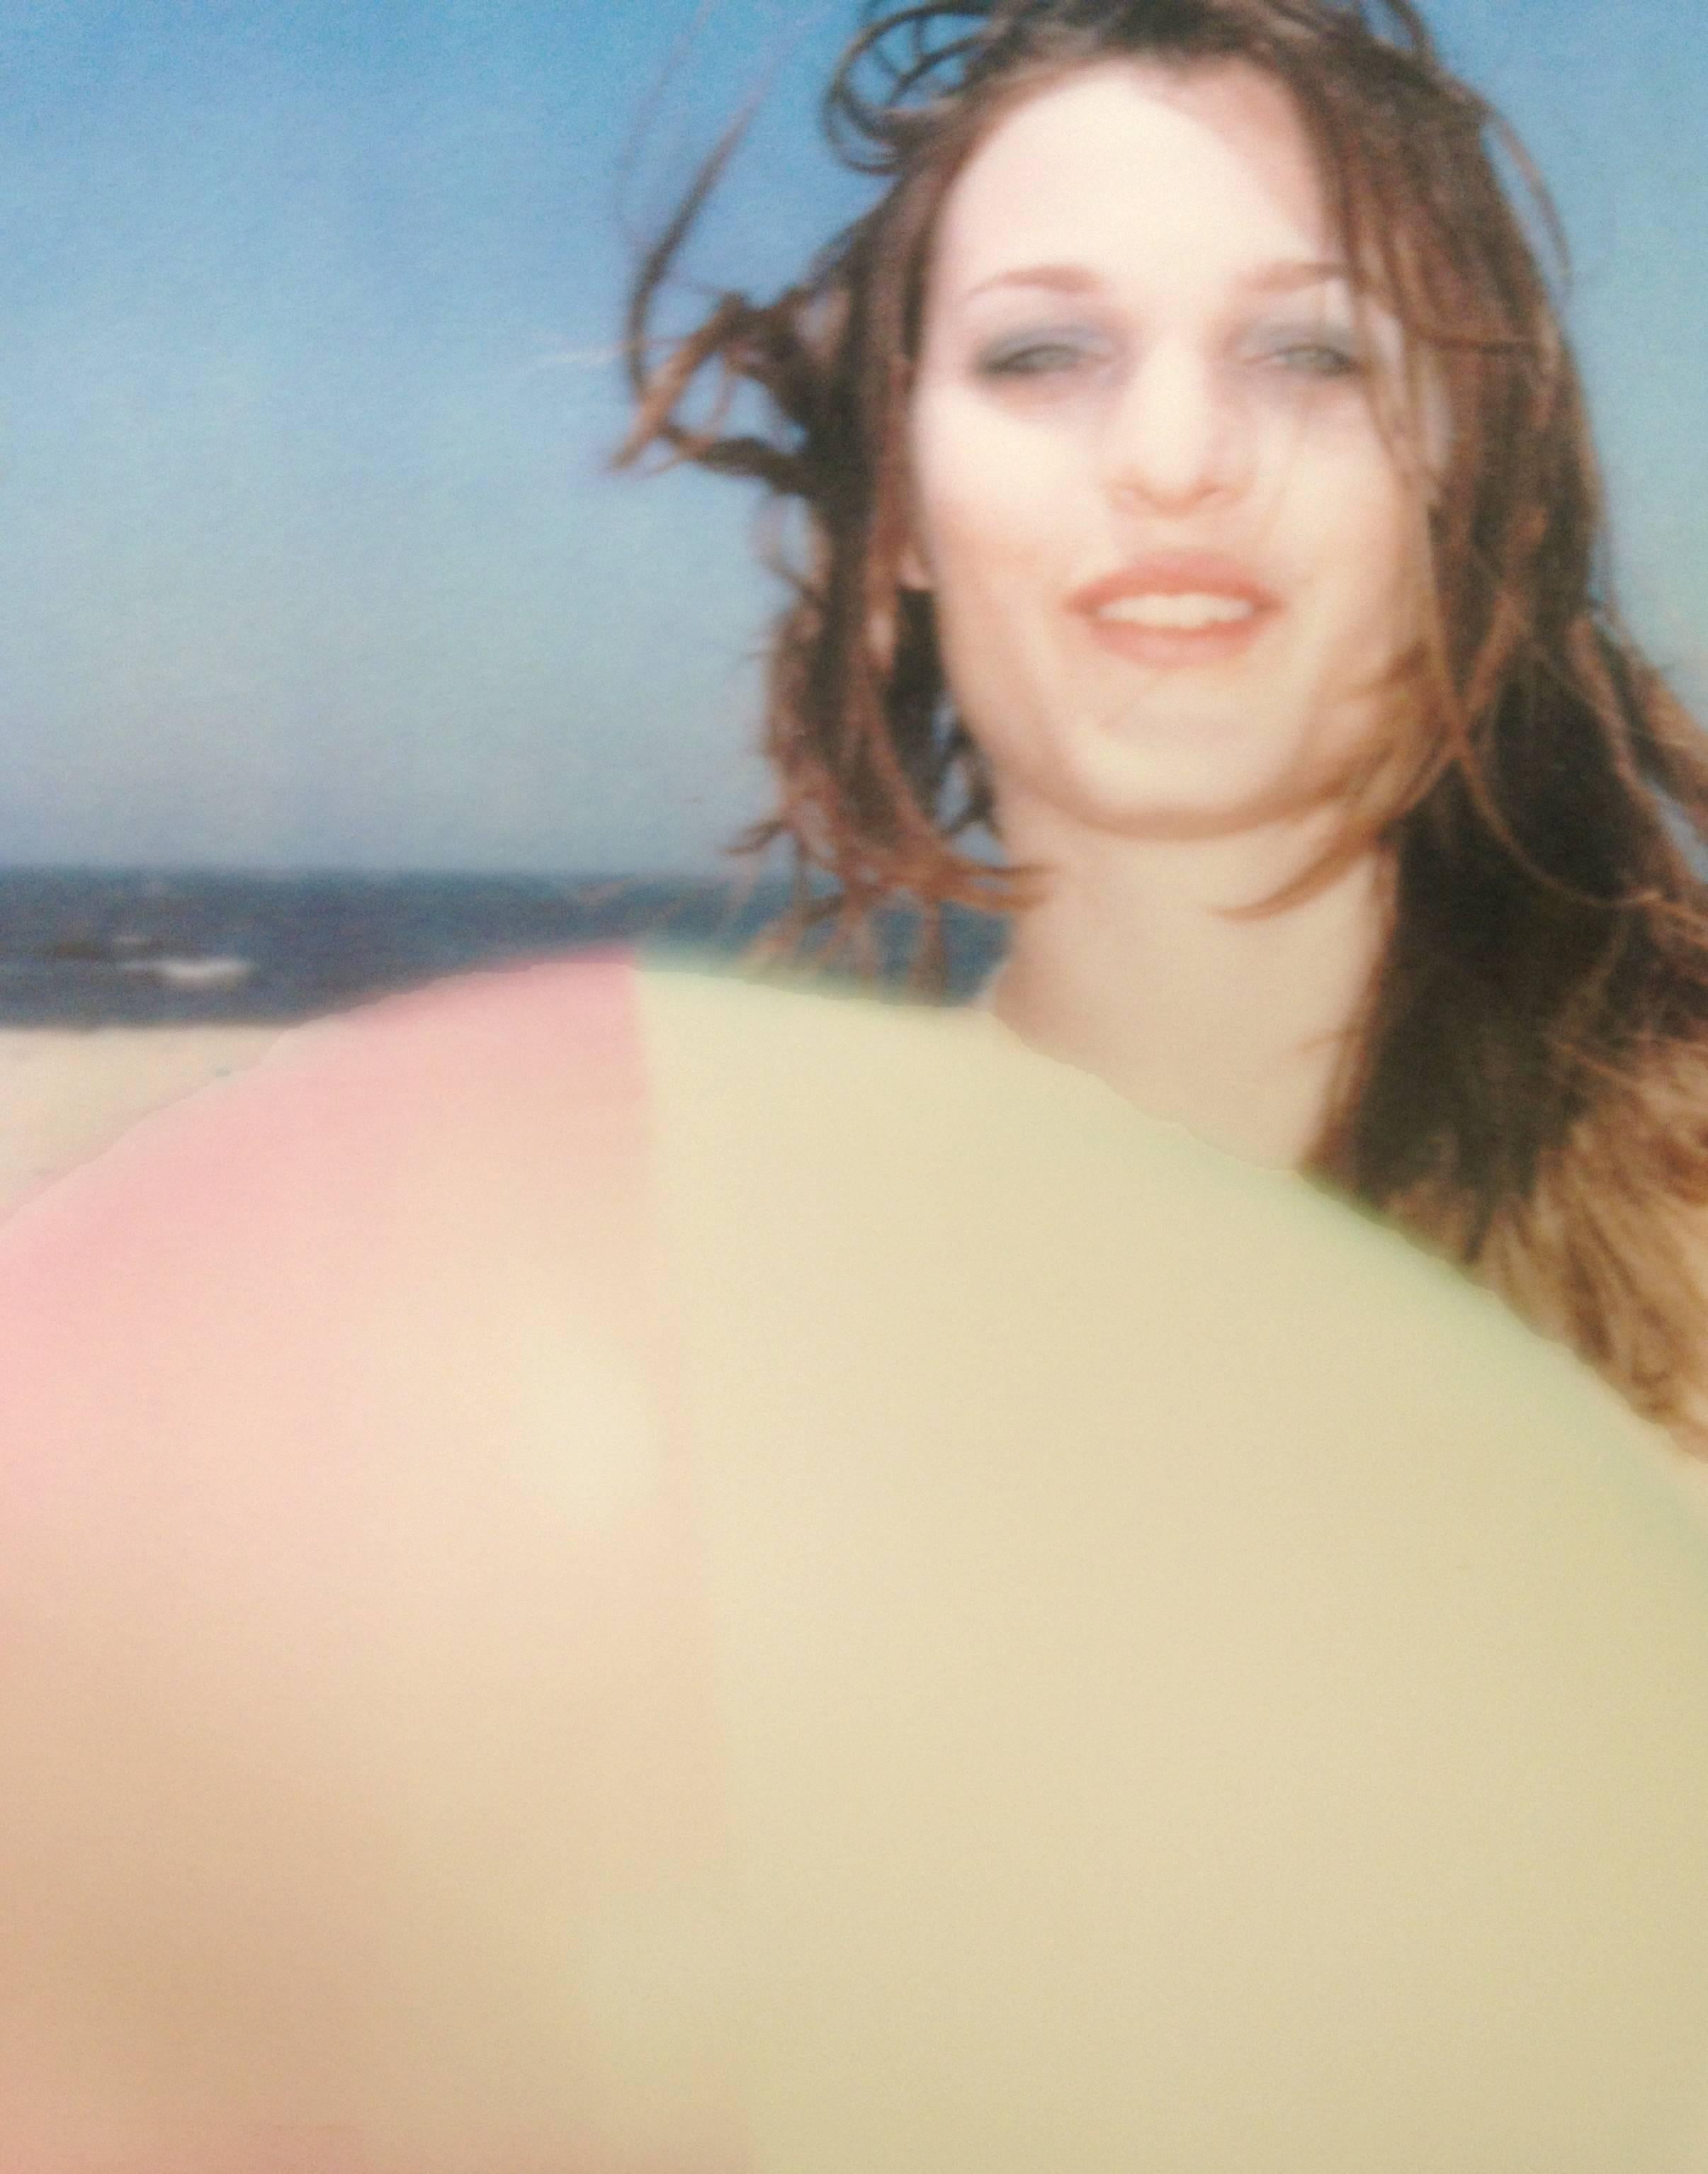 Camille with Beach Ball (Beachshoot) - Original Polaroid Unique Piece - Contemporary Photograph by Stefanie Schneider